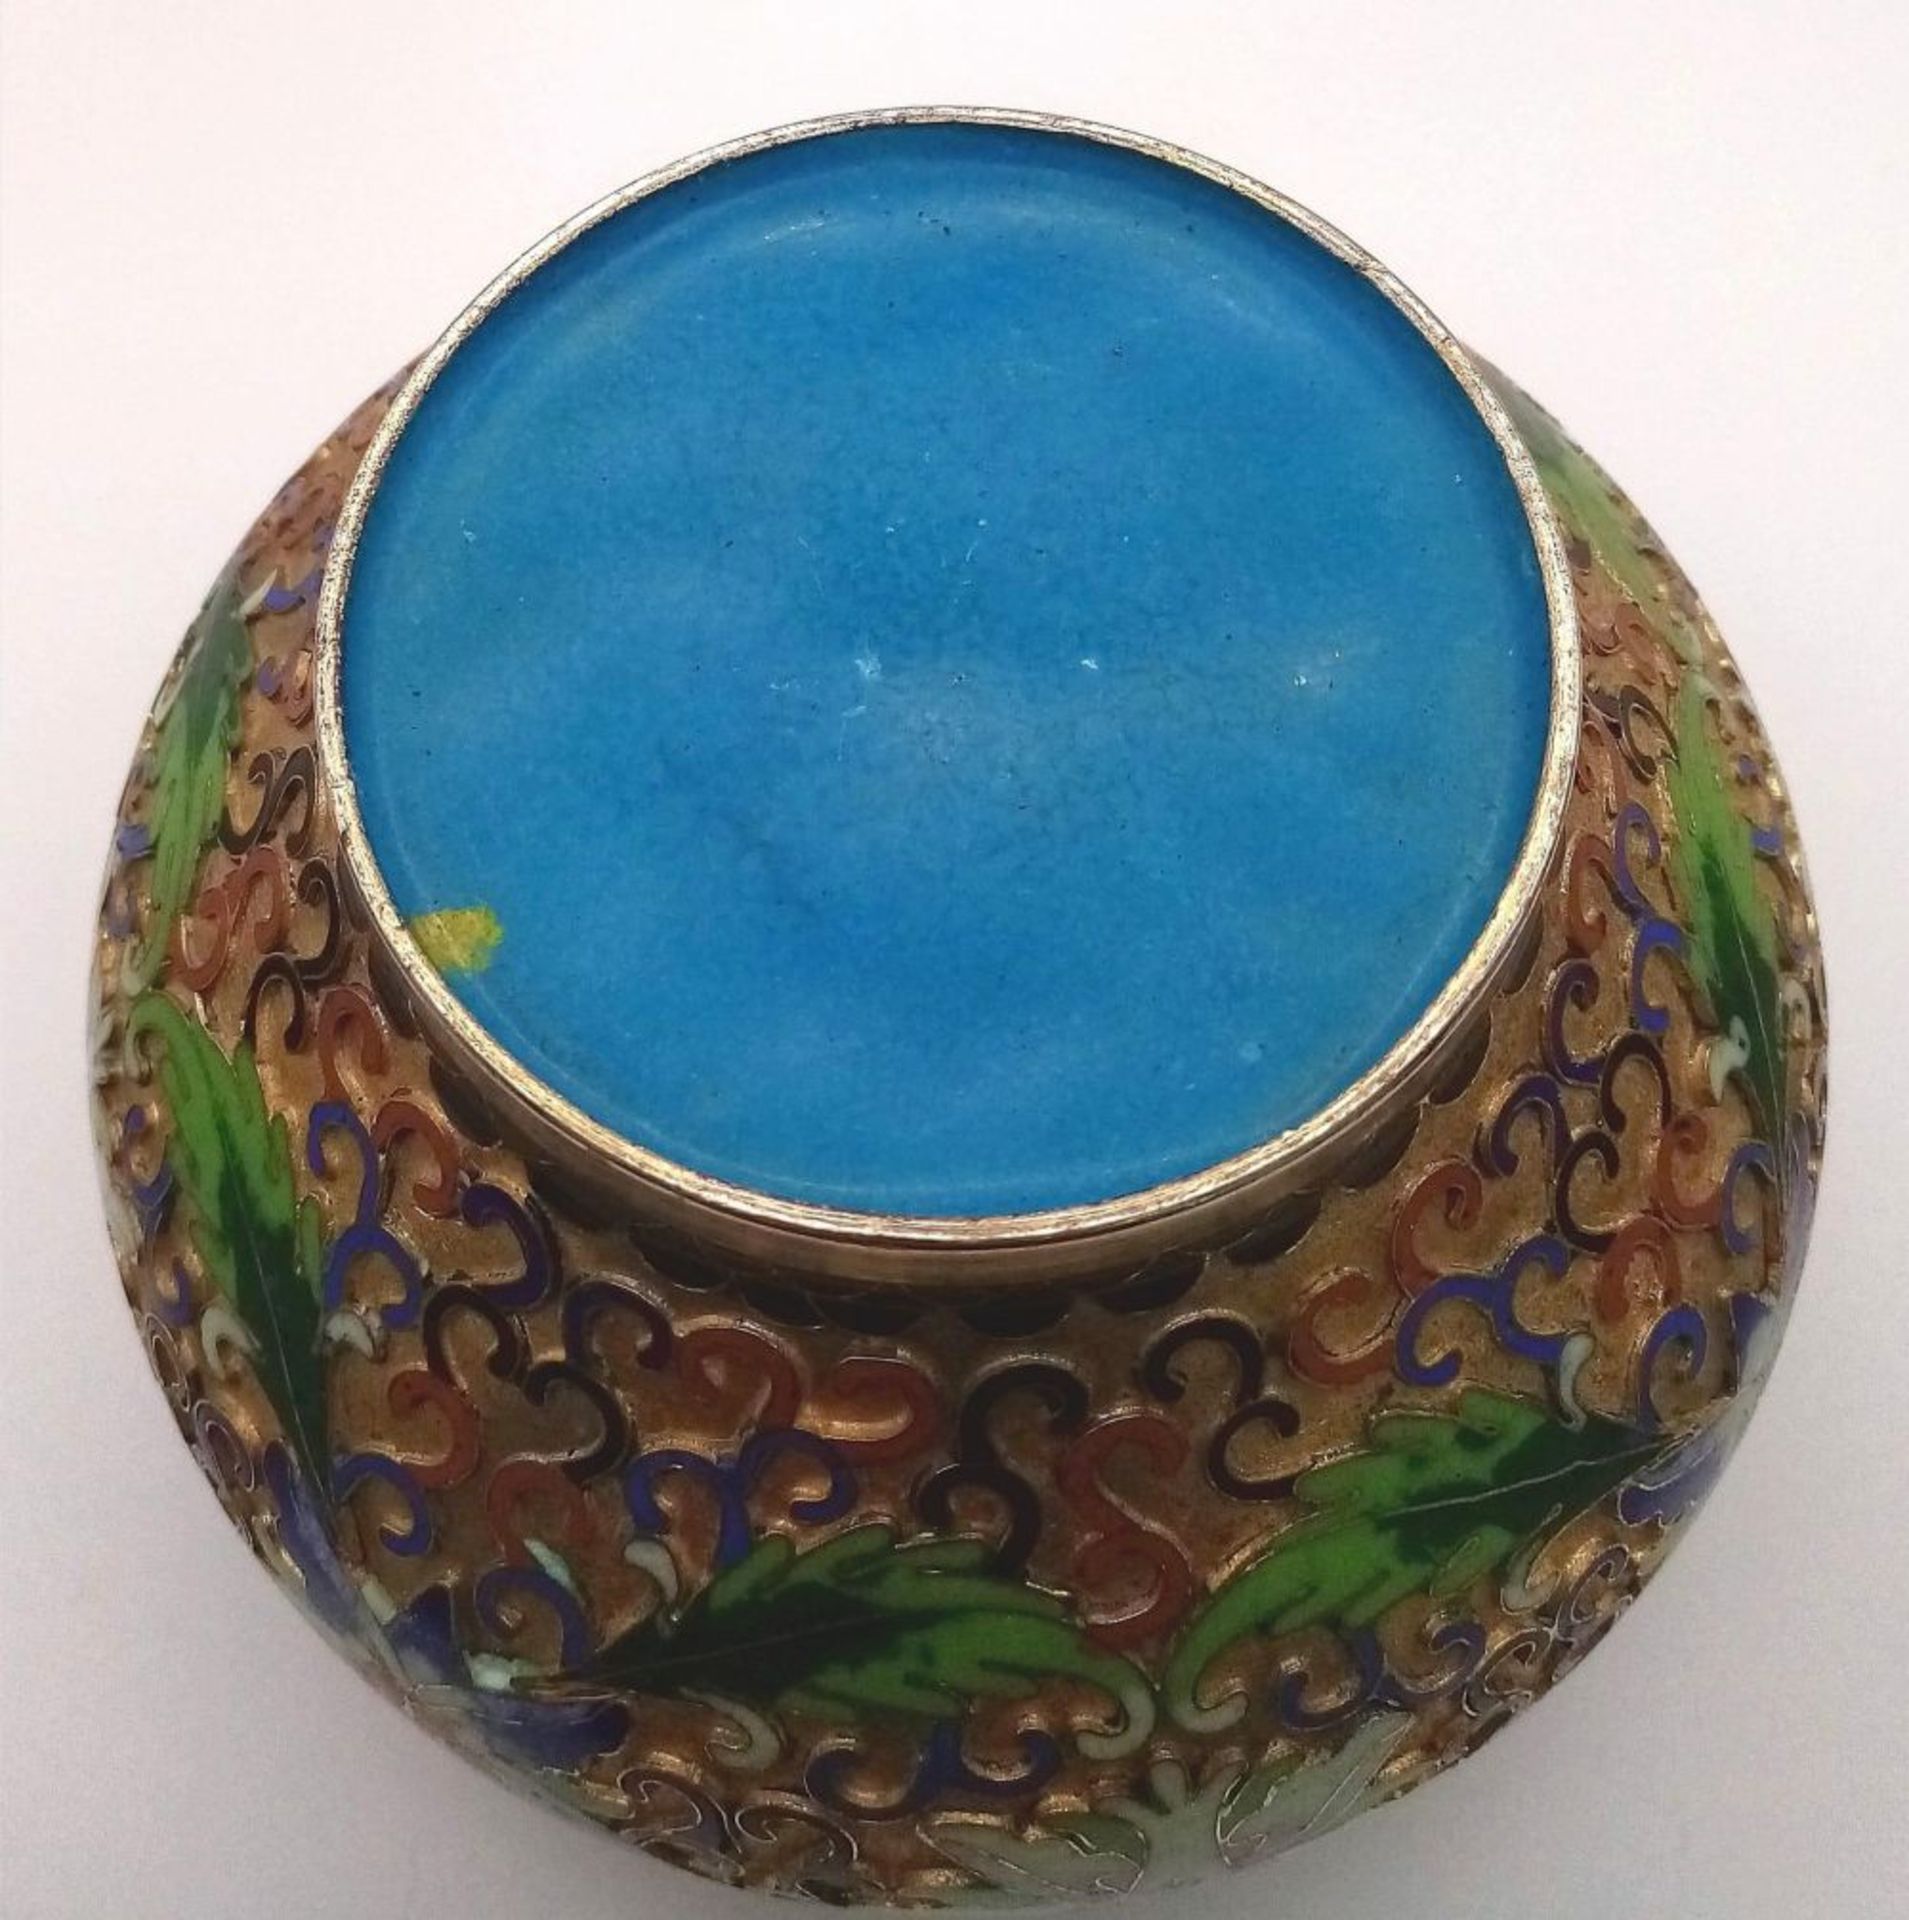 Stunning vintage Chinese Cloisonné Enamel Circular Pot. Wonderful floral decoration against a gold - Image 4 of 5